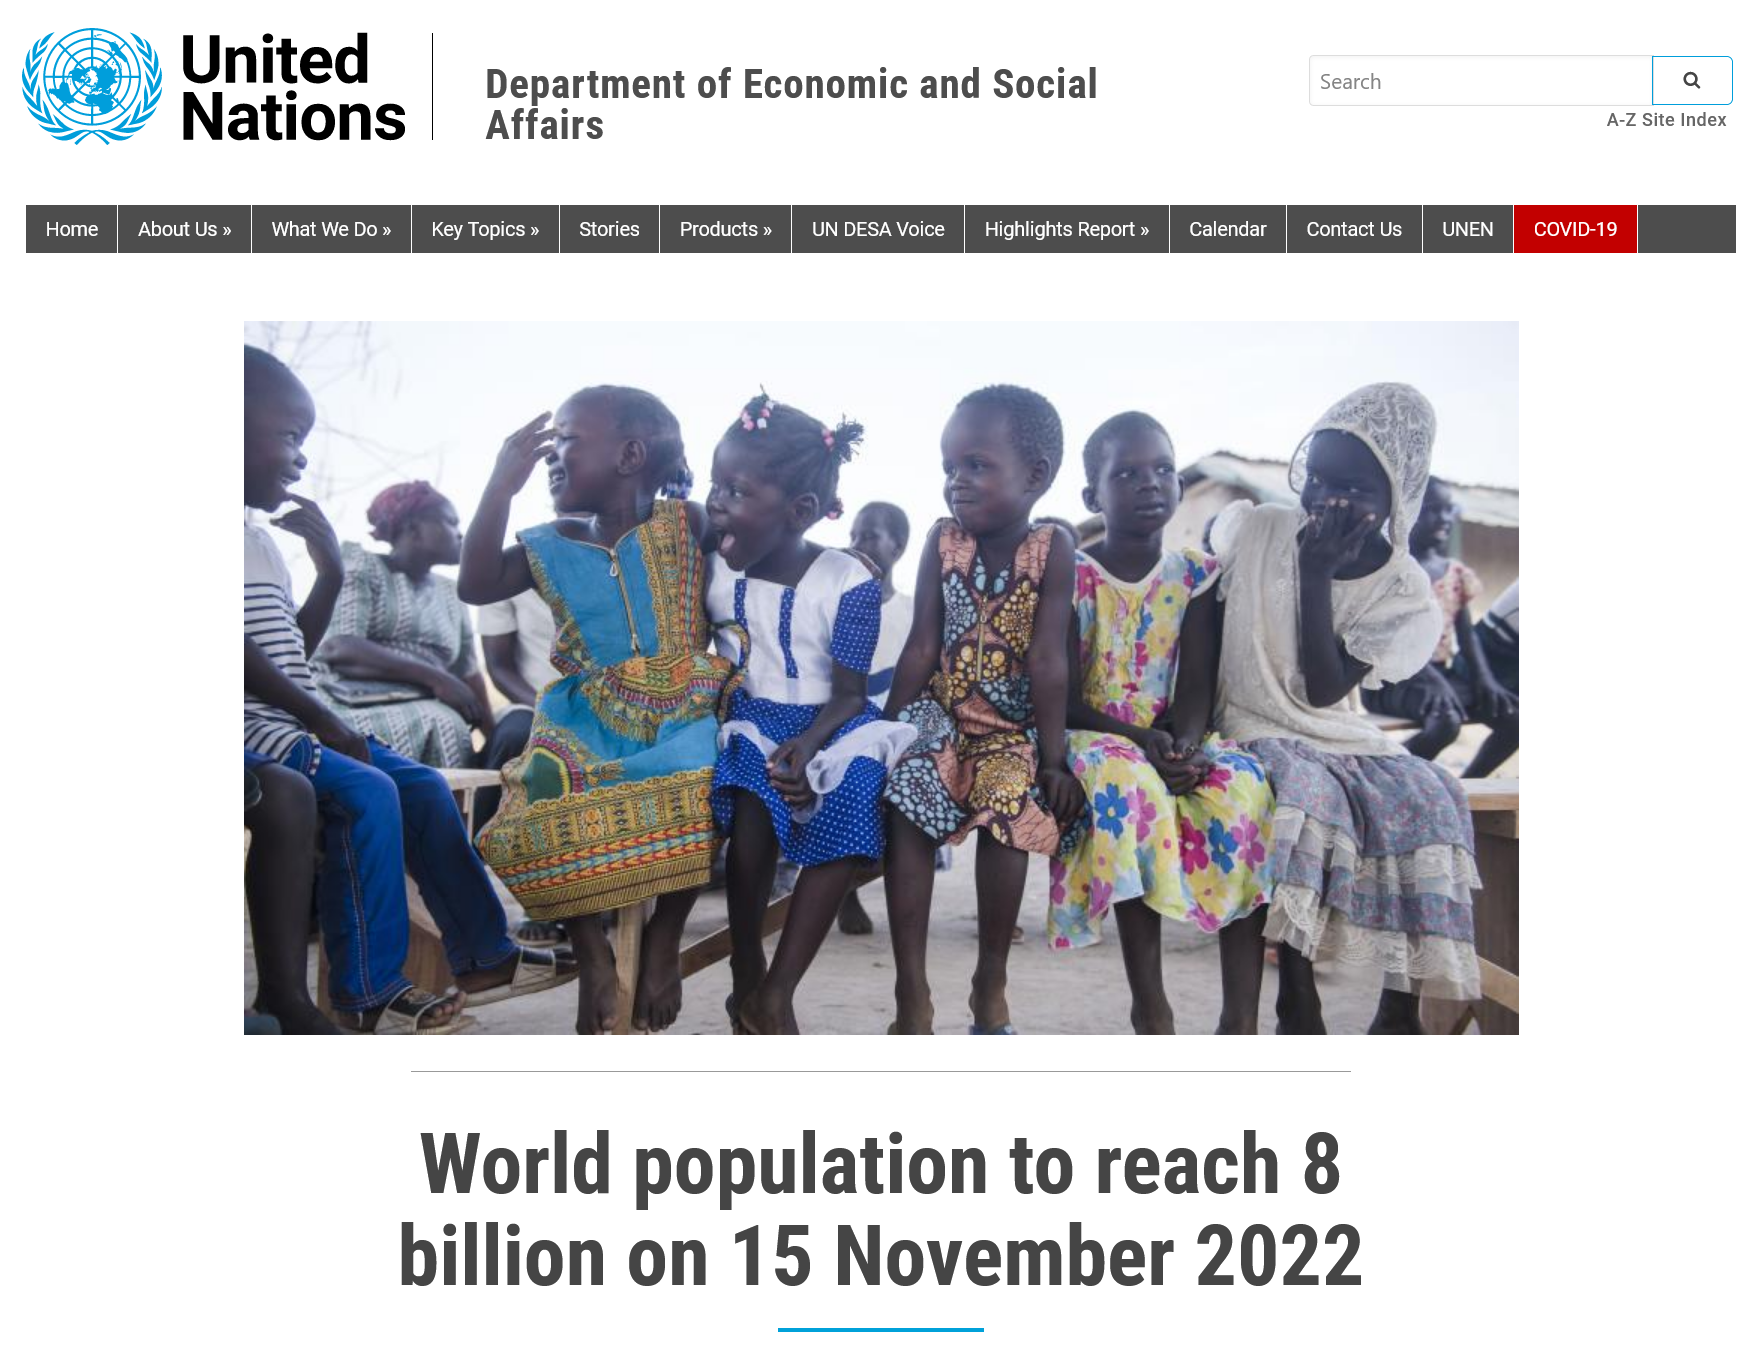 UN World Population 8 Billion, Nov 15 2022